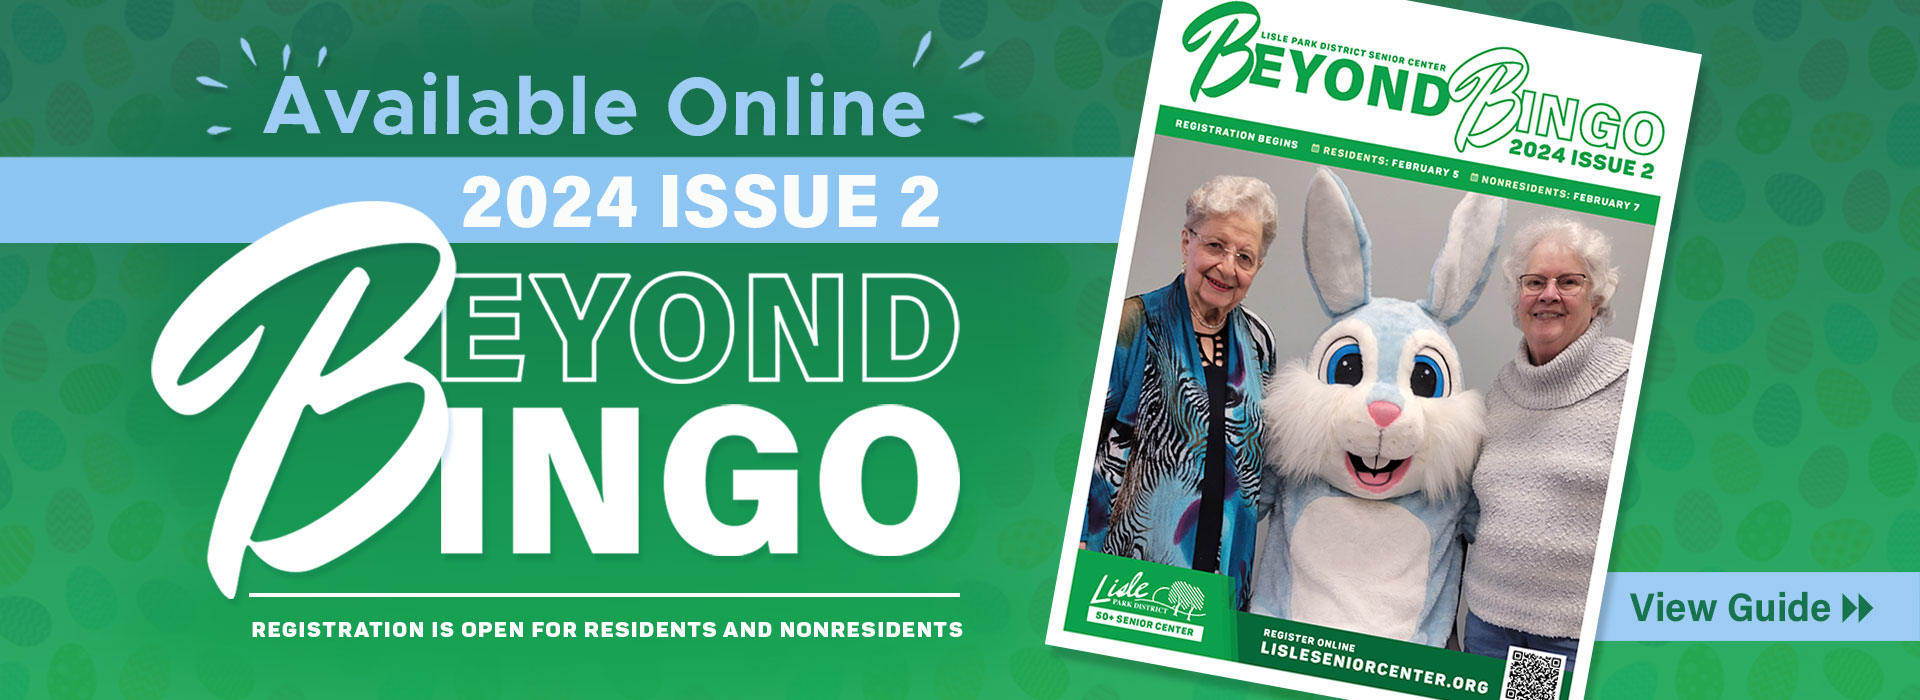 50+ Beyond Bingo 2024 Issue 2 Program Guide